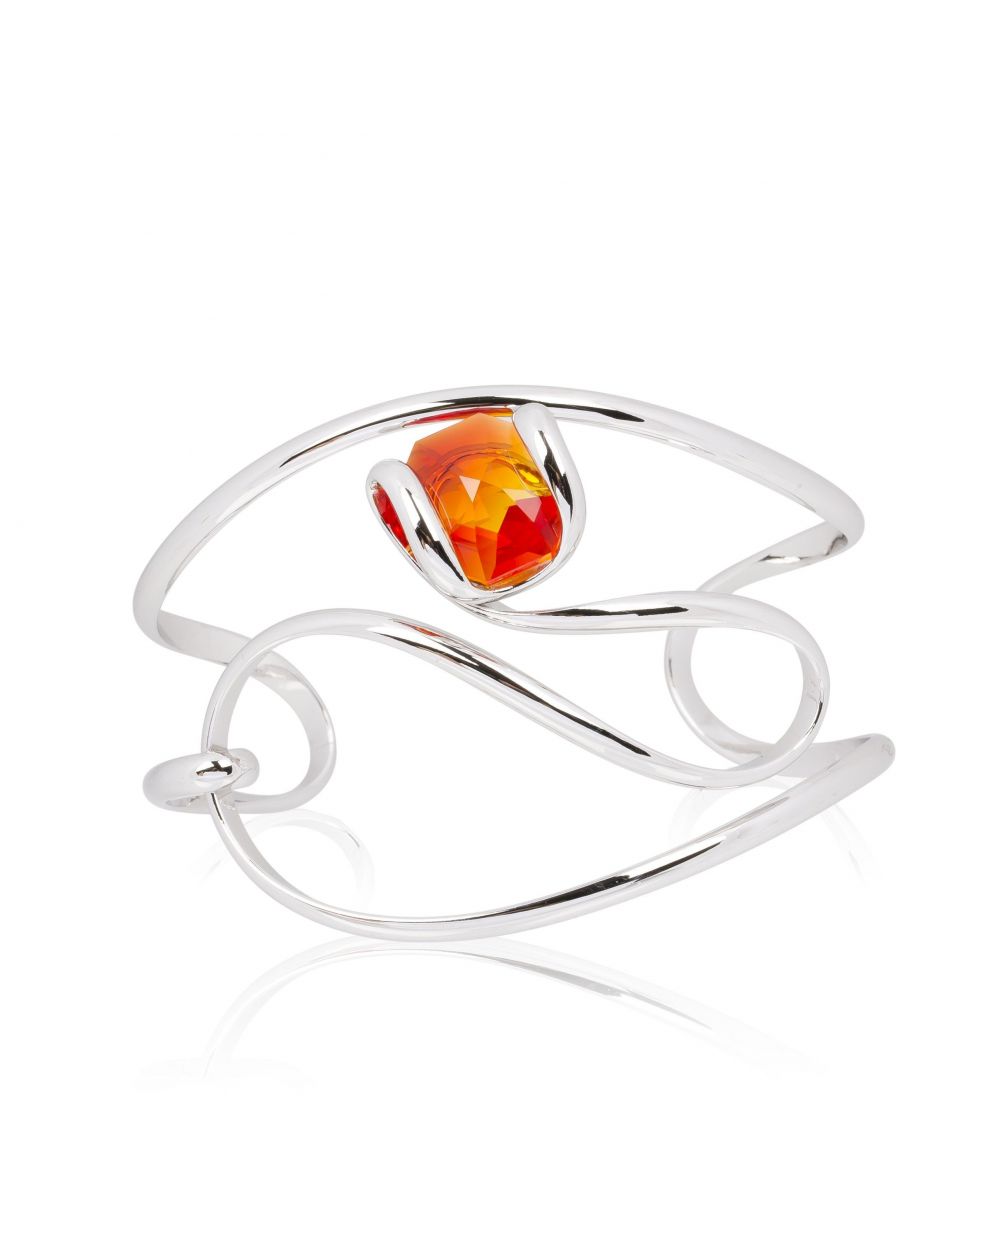 Andrea Marazzini bijoux - Bracelet cristal Swarovski Octagon Fire Opal BR3